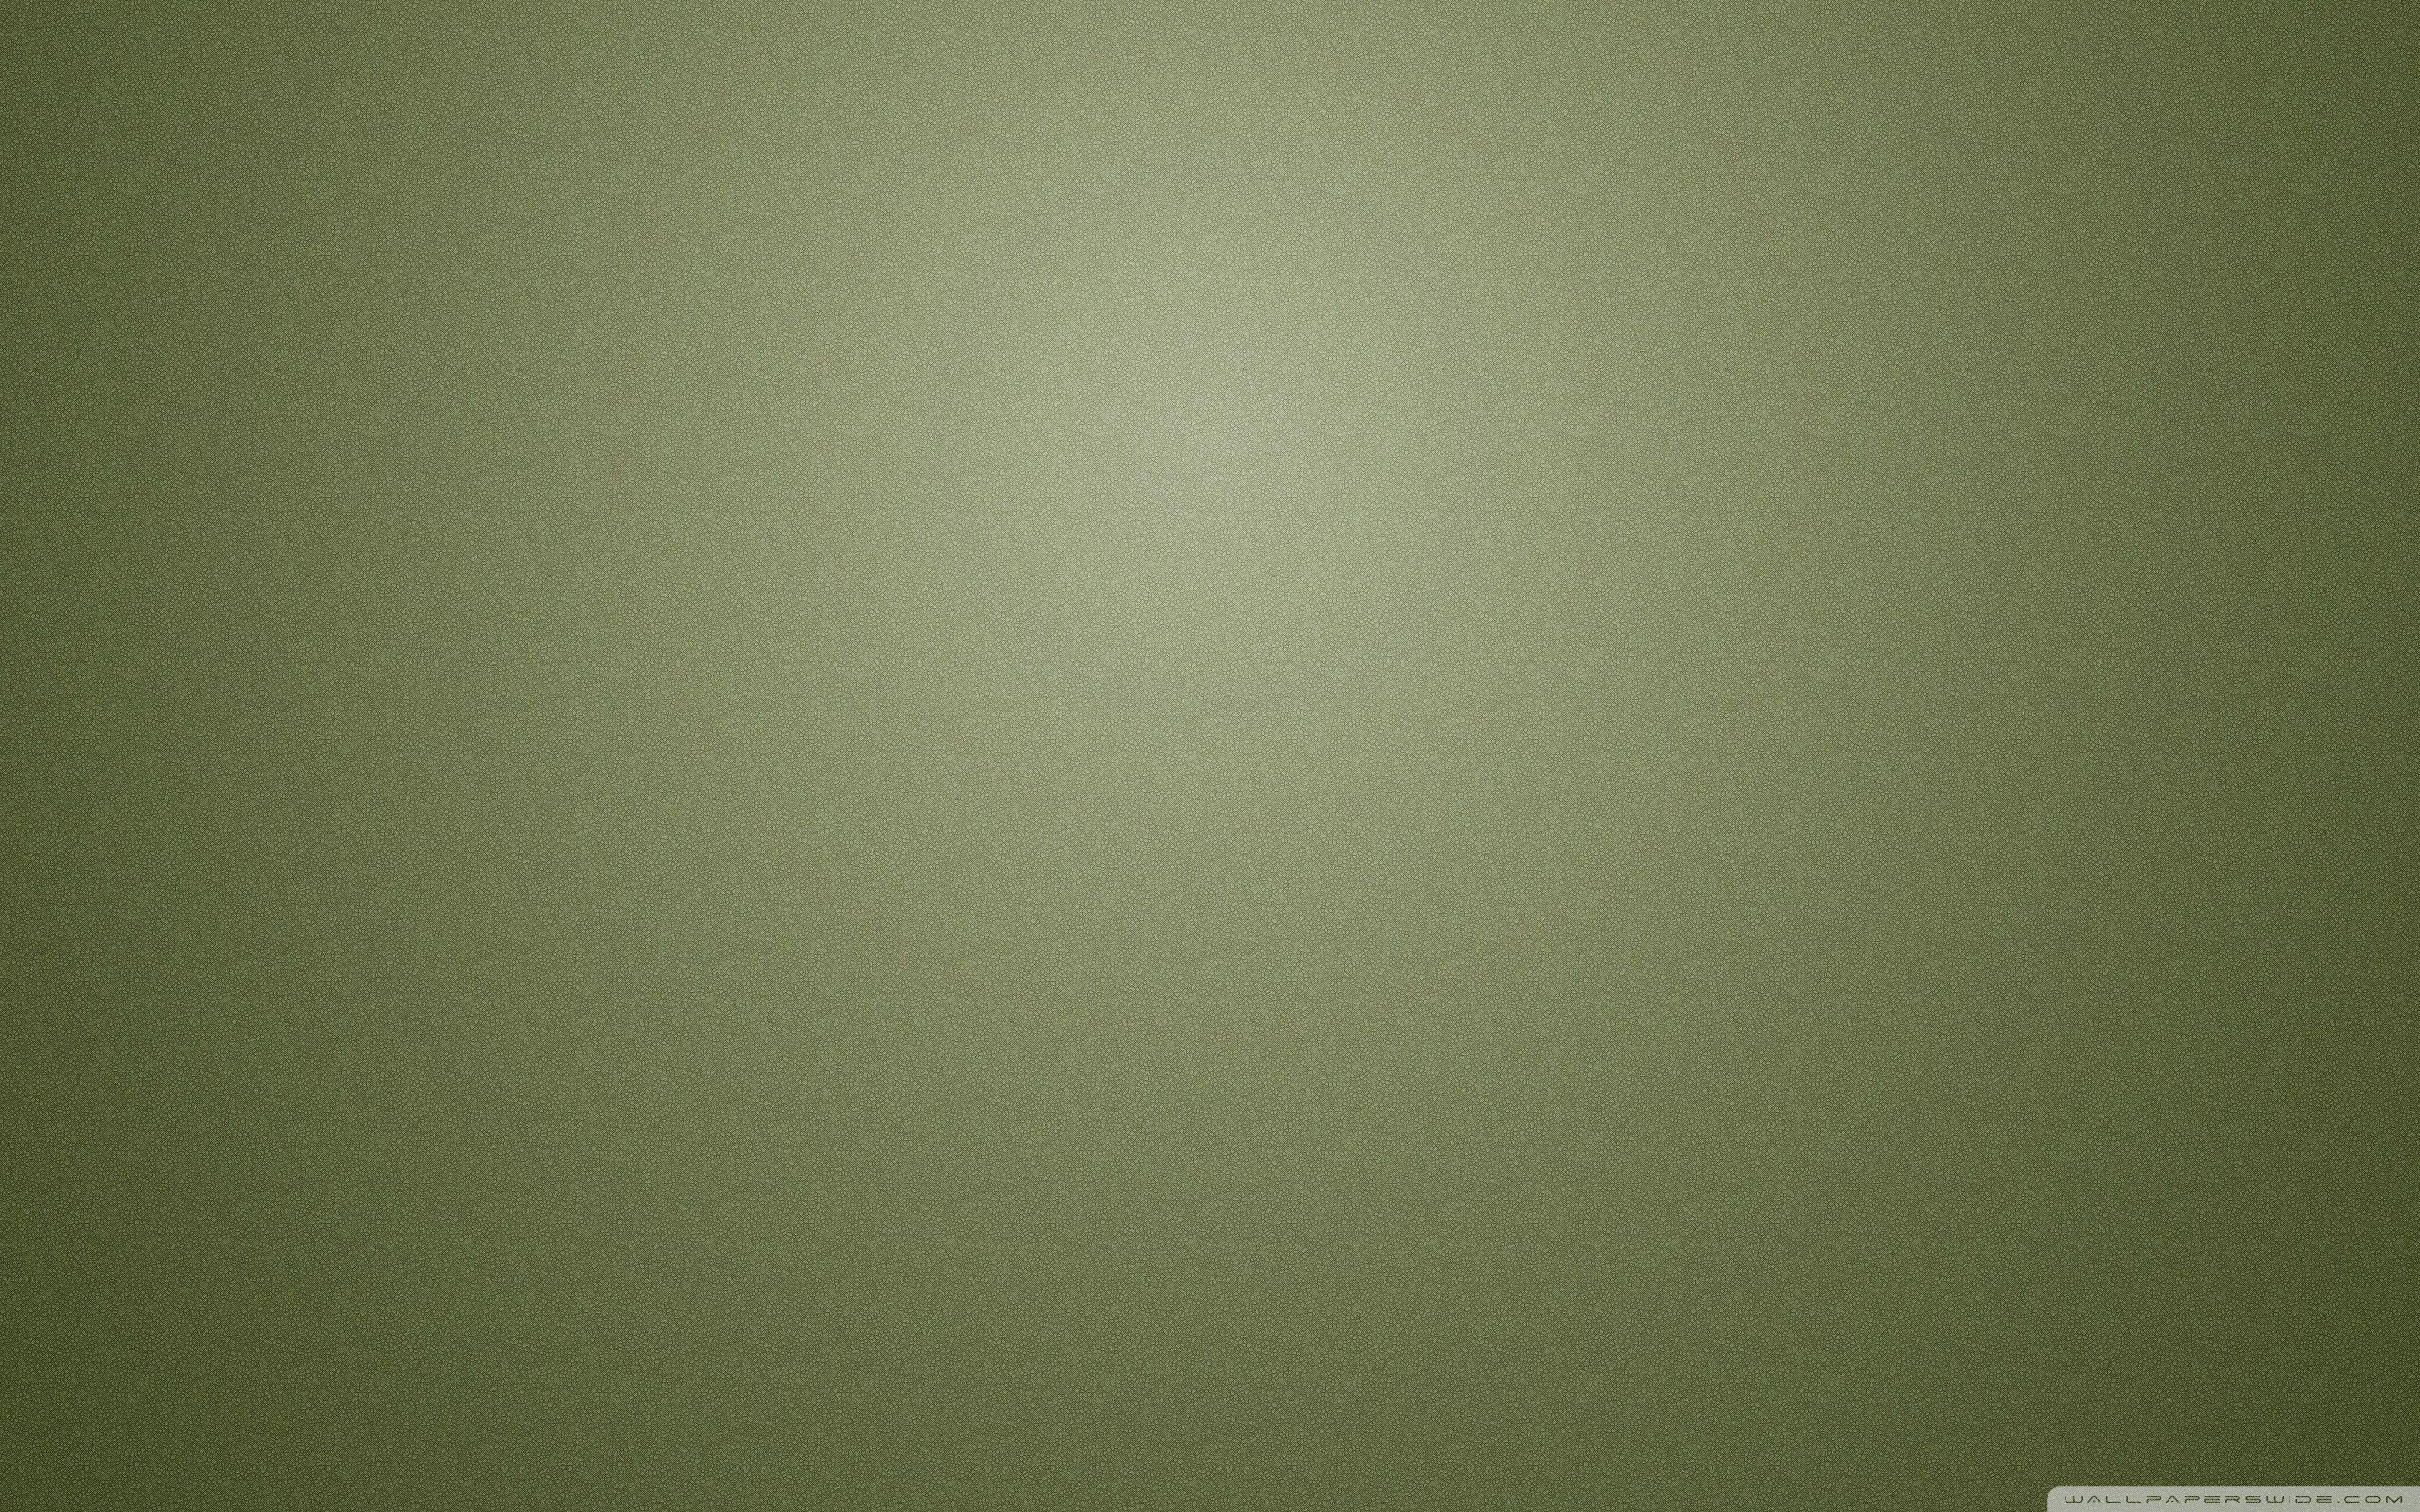 Olive HD desktop wallpaper, High Definition, Fullscreen, Mobile